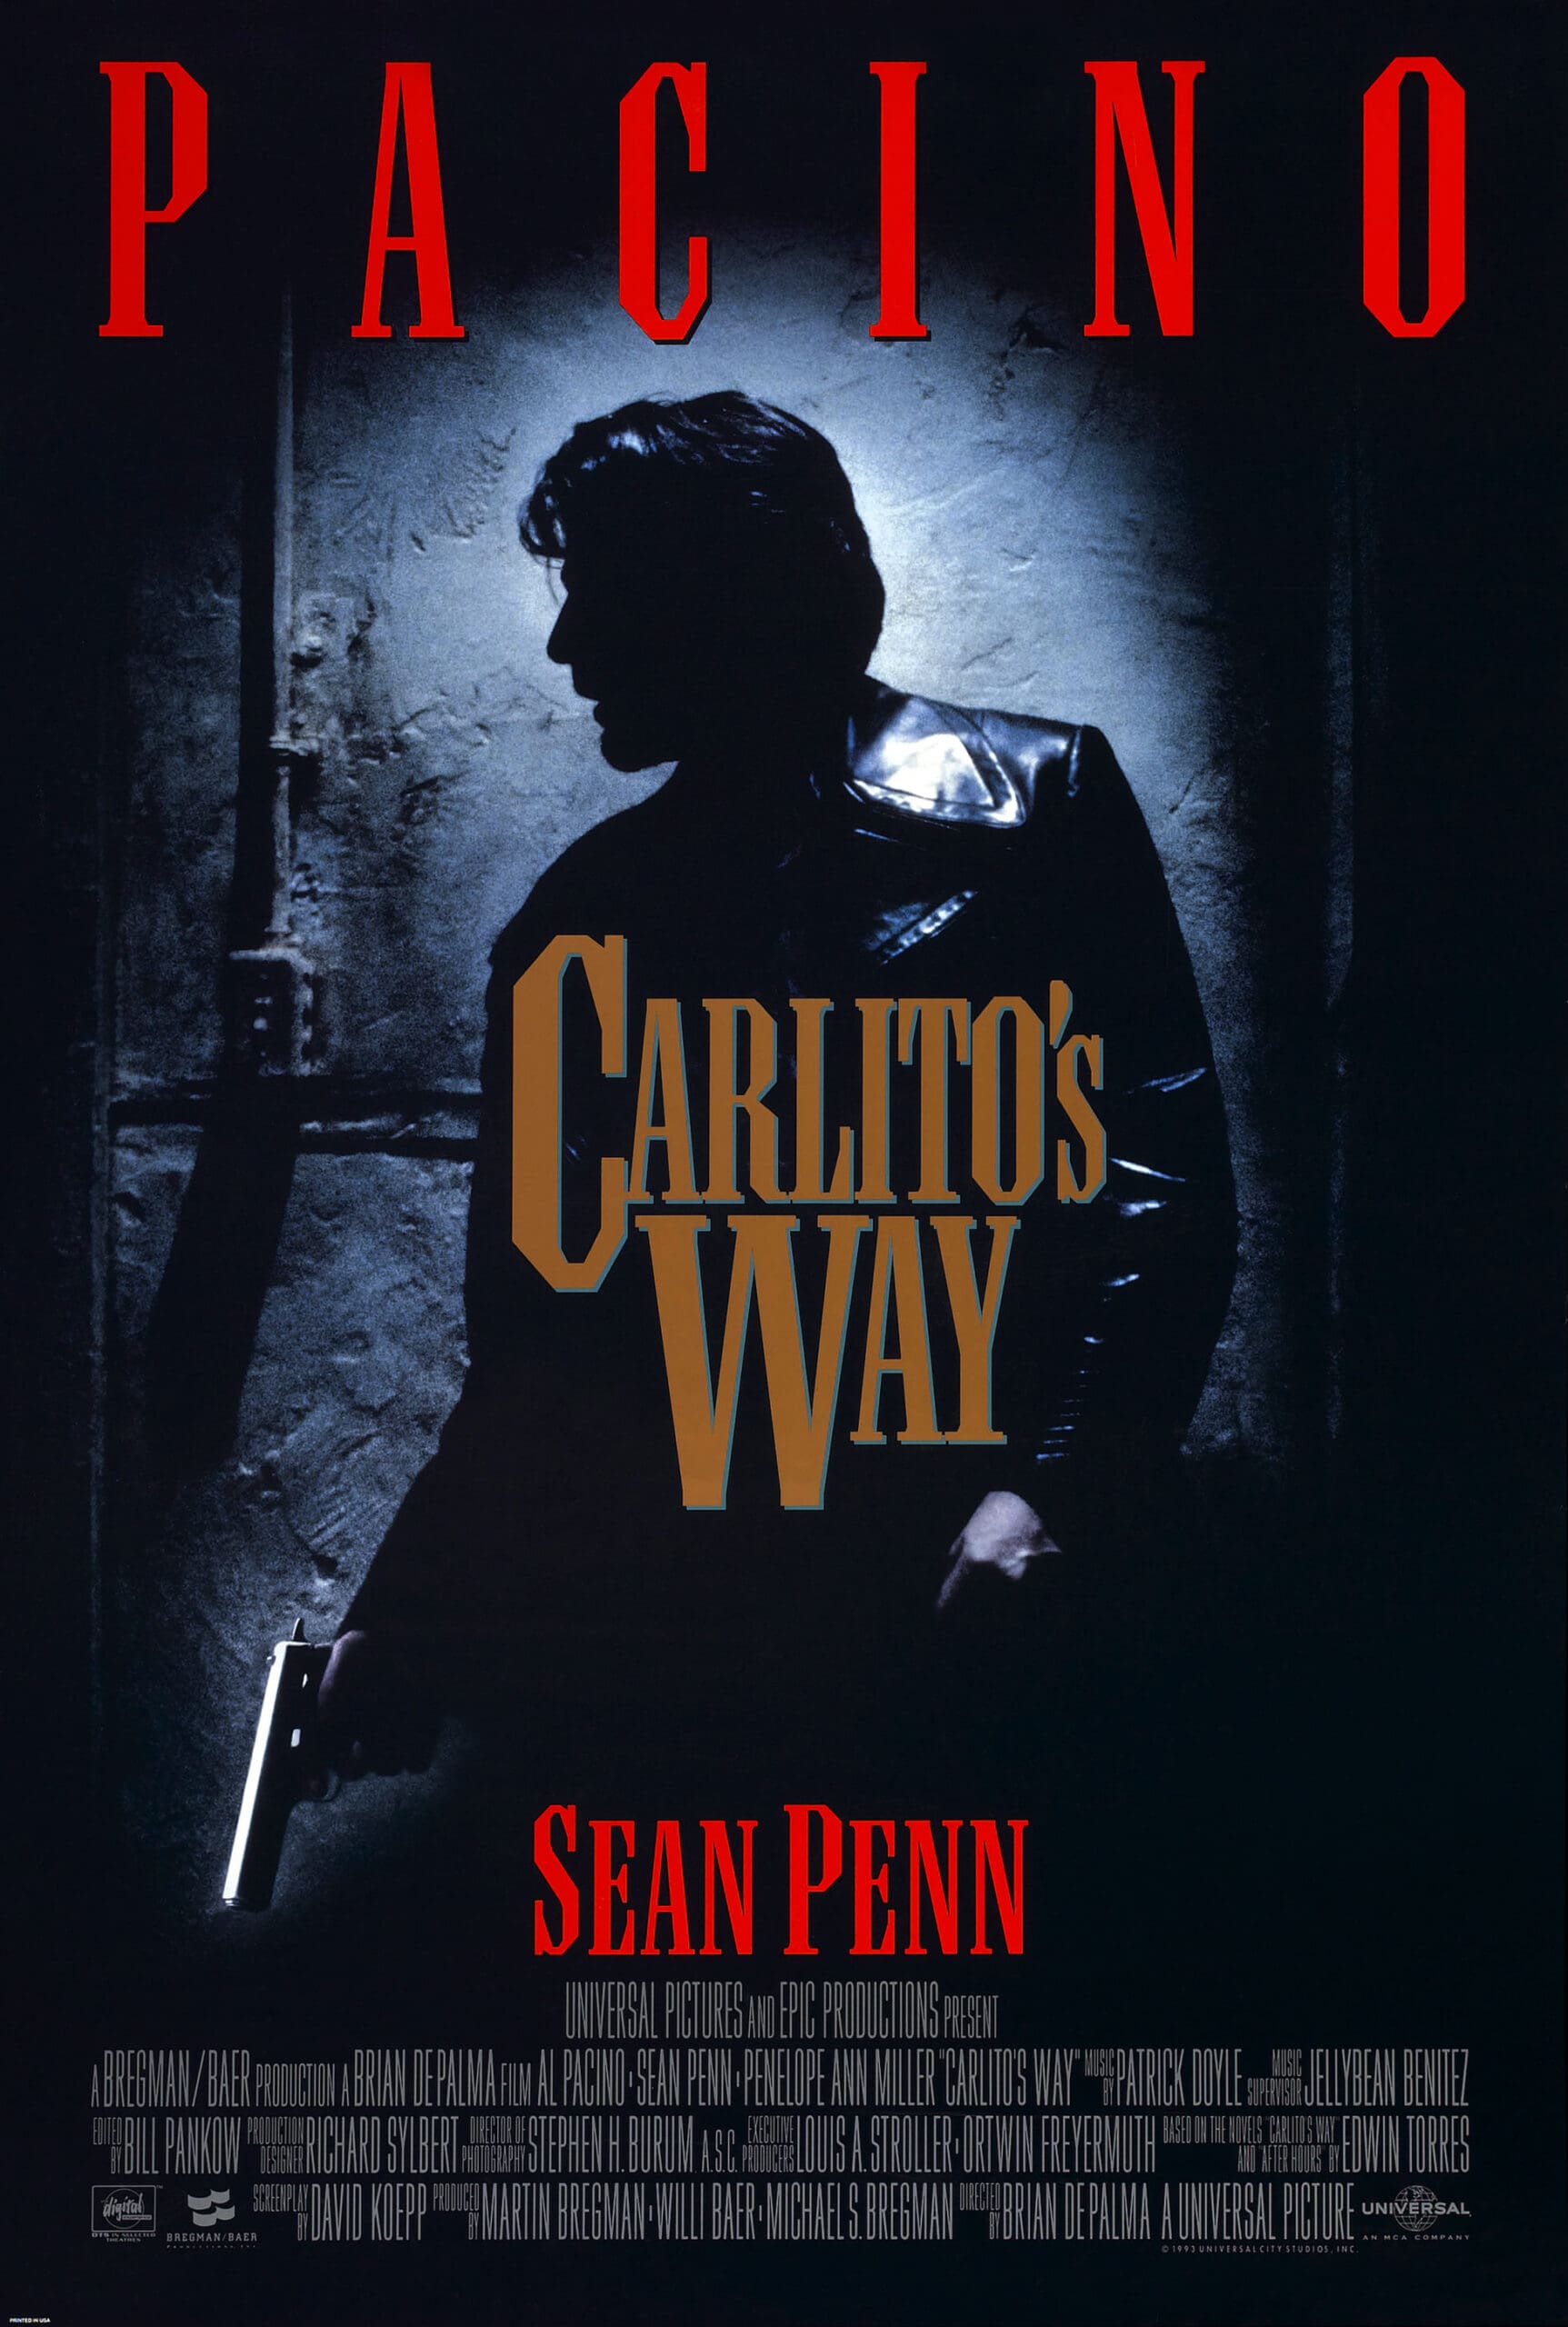 Carlito's Way : อหังการคาร์ลิโต้